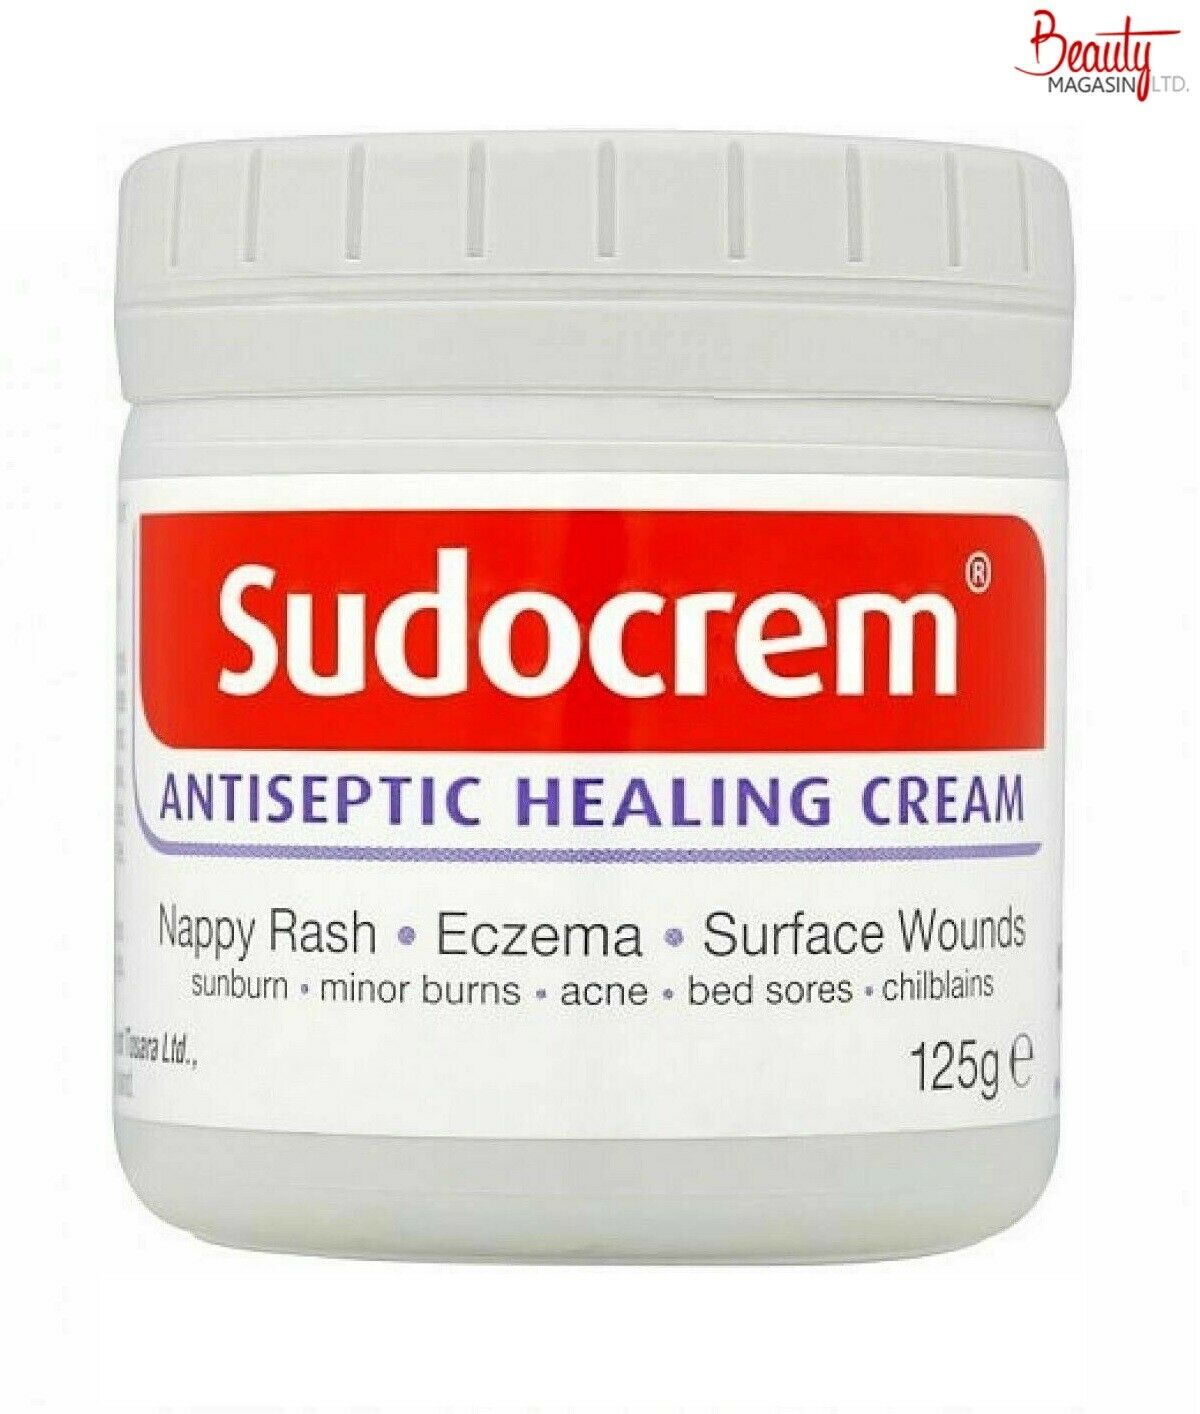 Sudocrem Antiseptic Healing Cream 125g - Exp.07/2023 Free Shipping To Usa